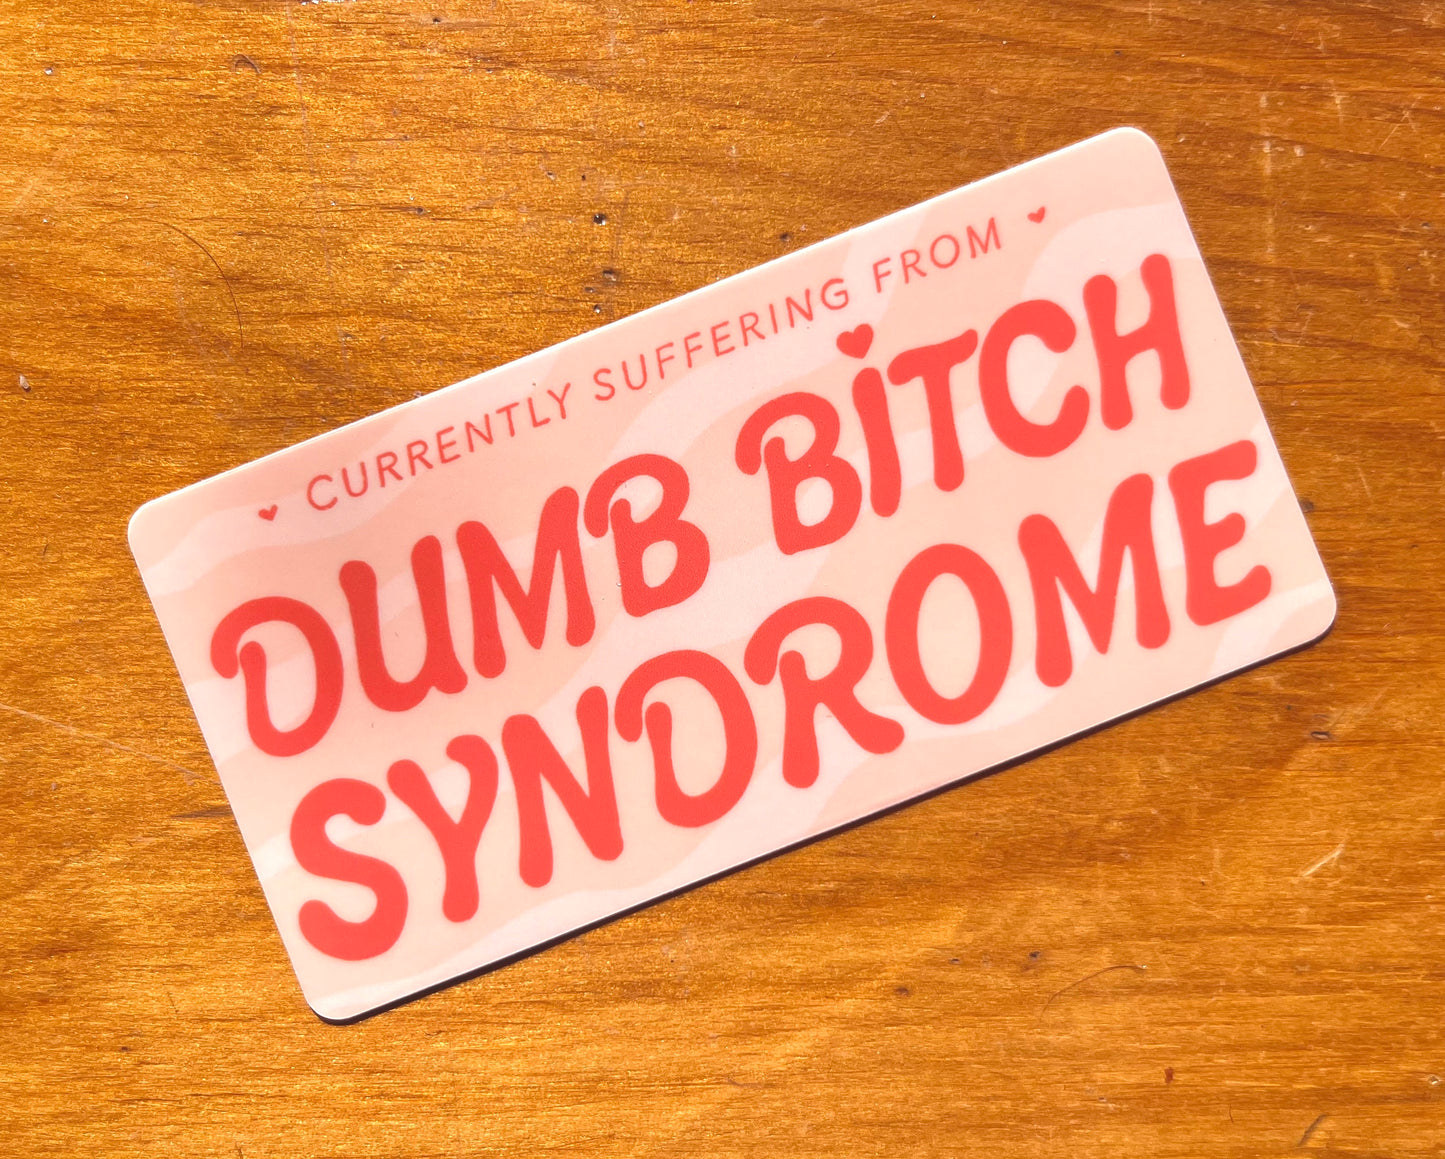 Dumb Bitch Syndrome Sticker